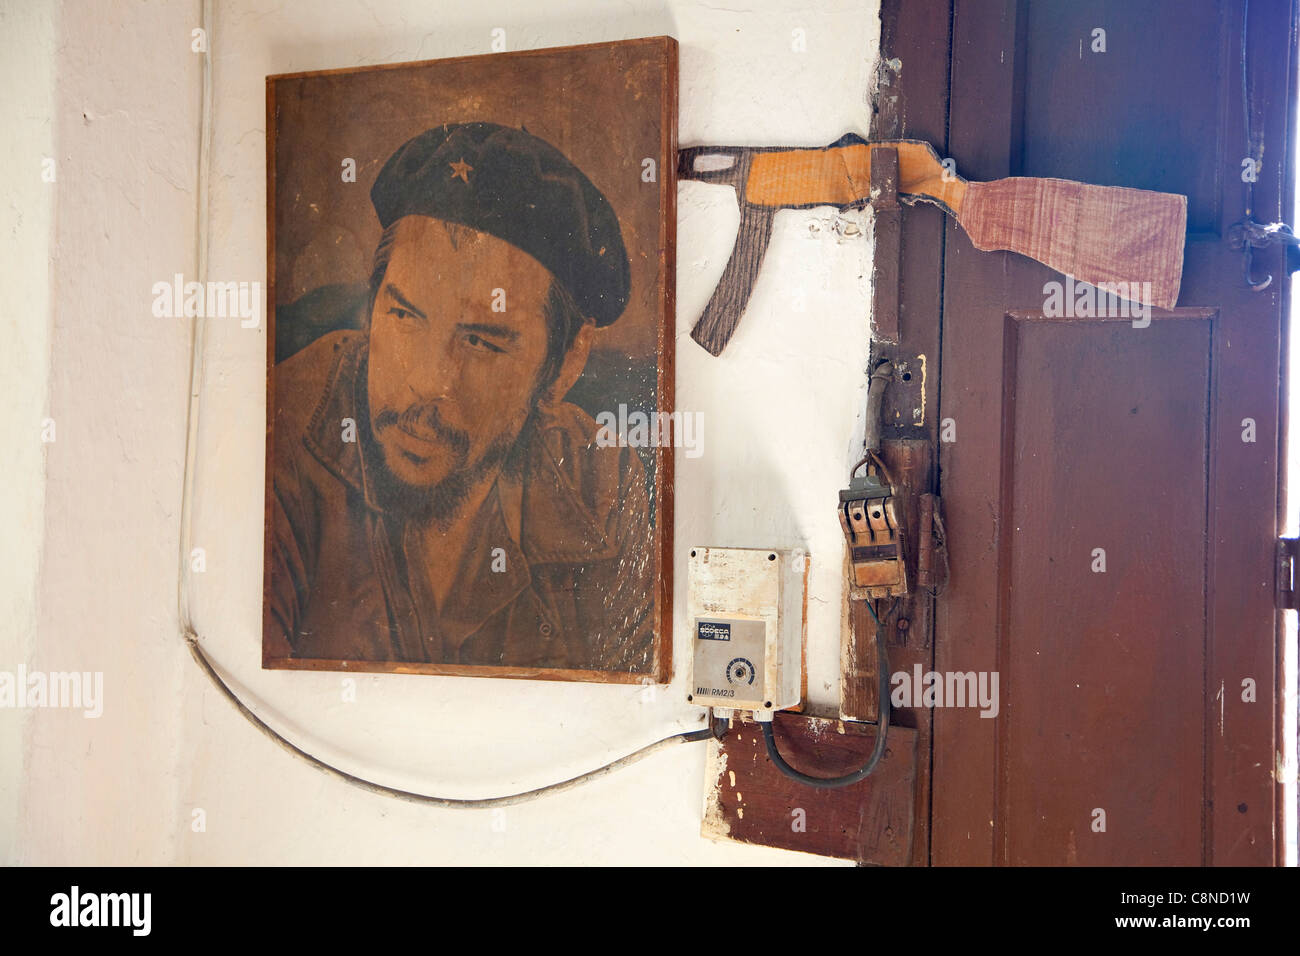 Portrait of Che Guevara on the wall with AK-47 kalashnikov rifle made of paper, Havana, Cuba Stock Photo